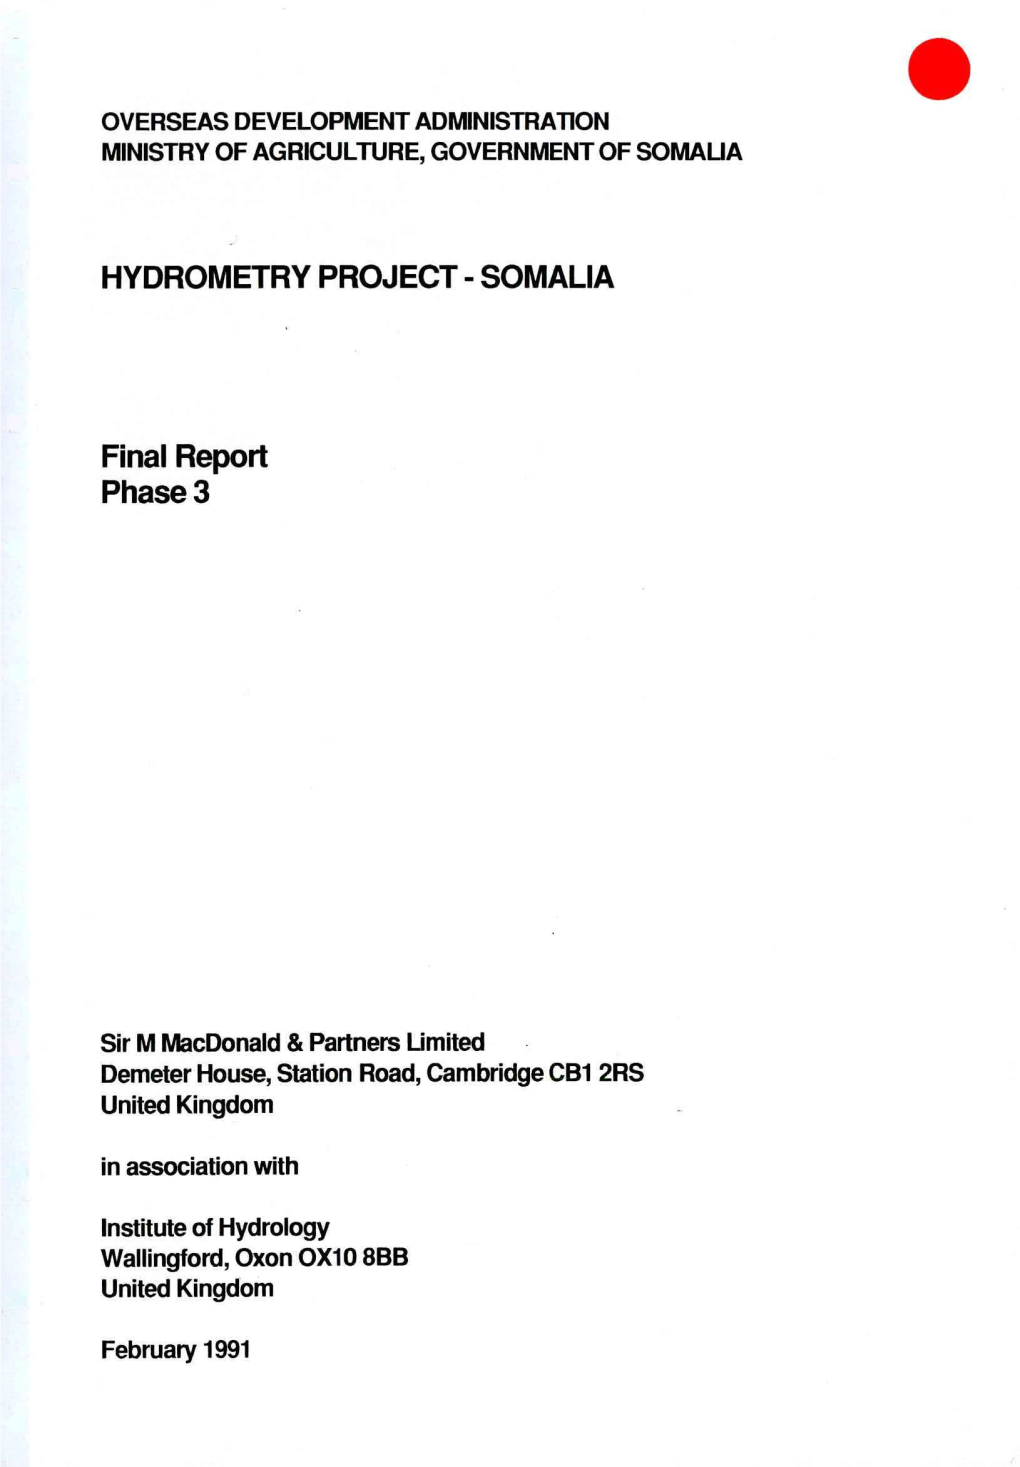 Hydrometry Project - Somalia